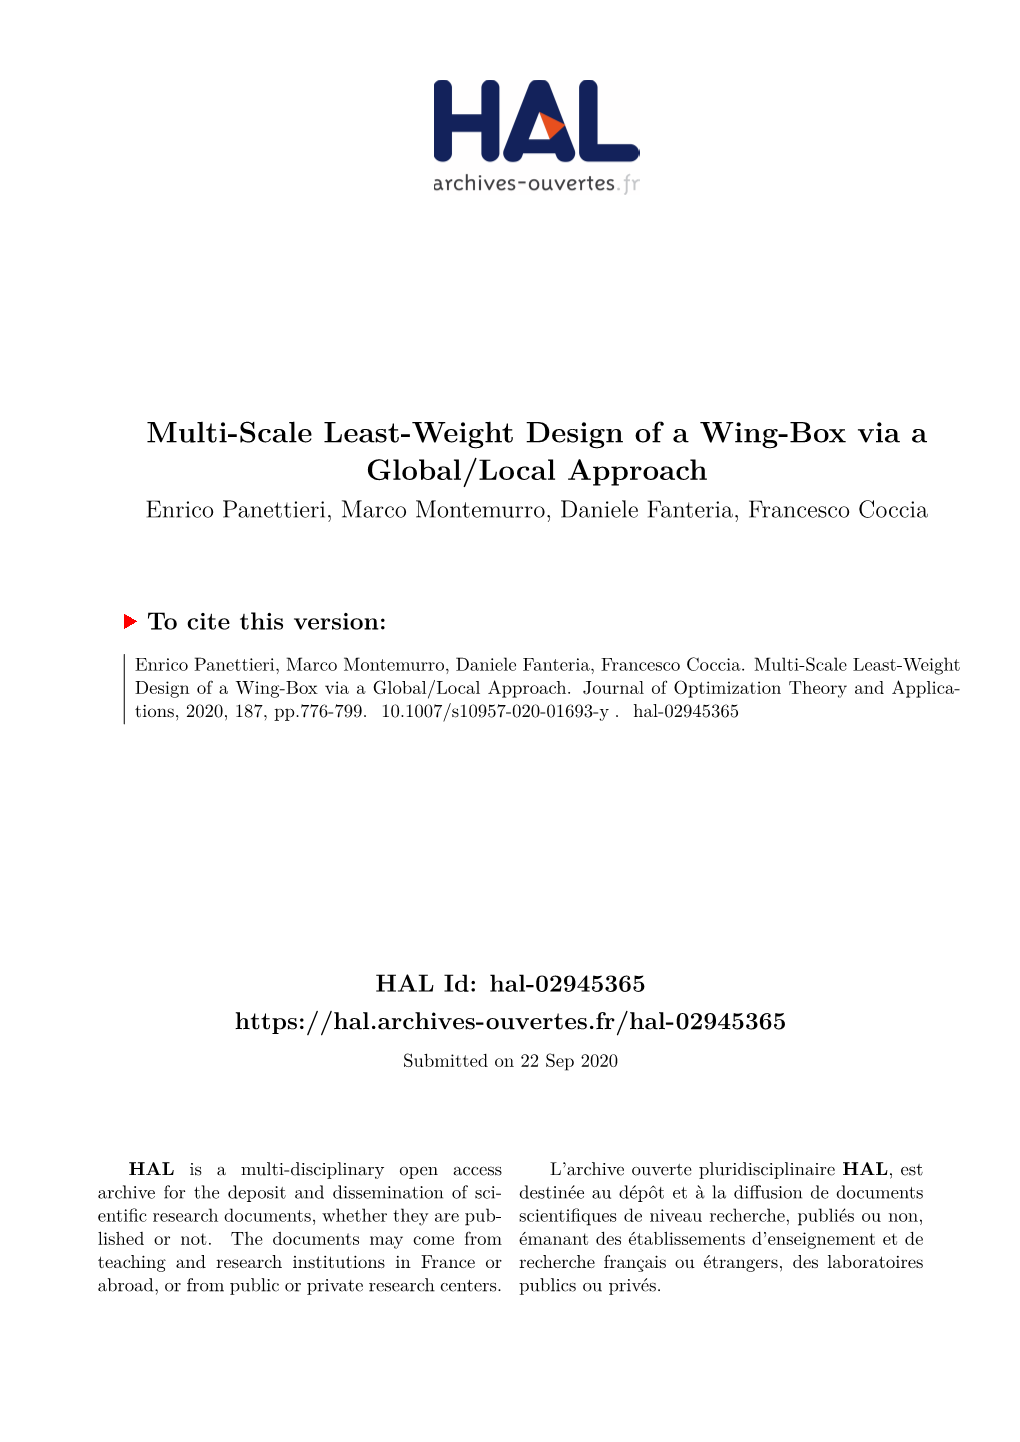 Multi-Scale Least-Weight Design of a Wing-Box Via a Global/Local Approach Enrico Panettieri, Marco Montemurro, Daniele Fanteria, Francesco Coccia